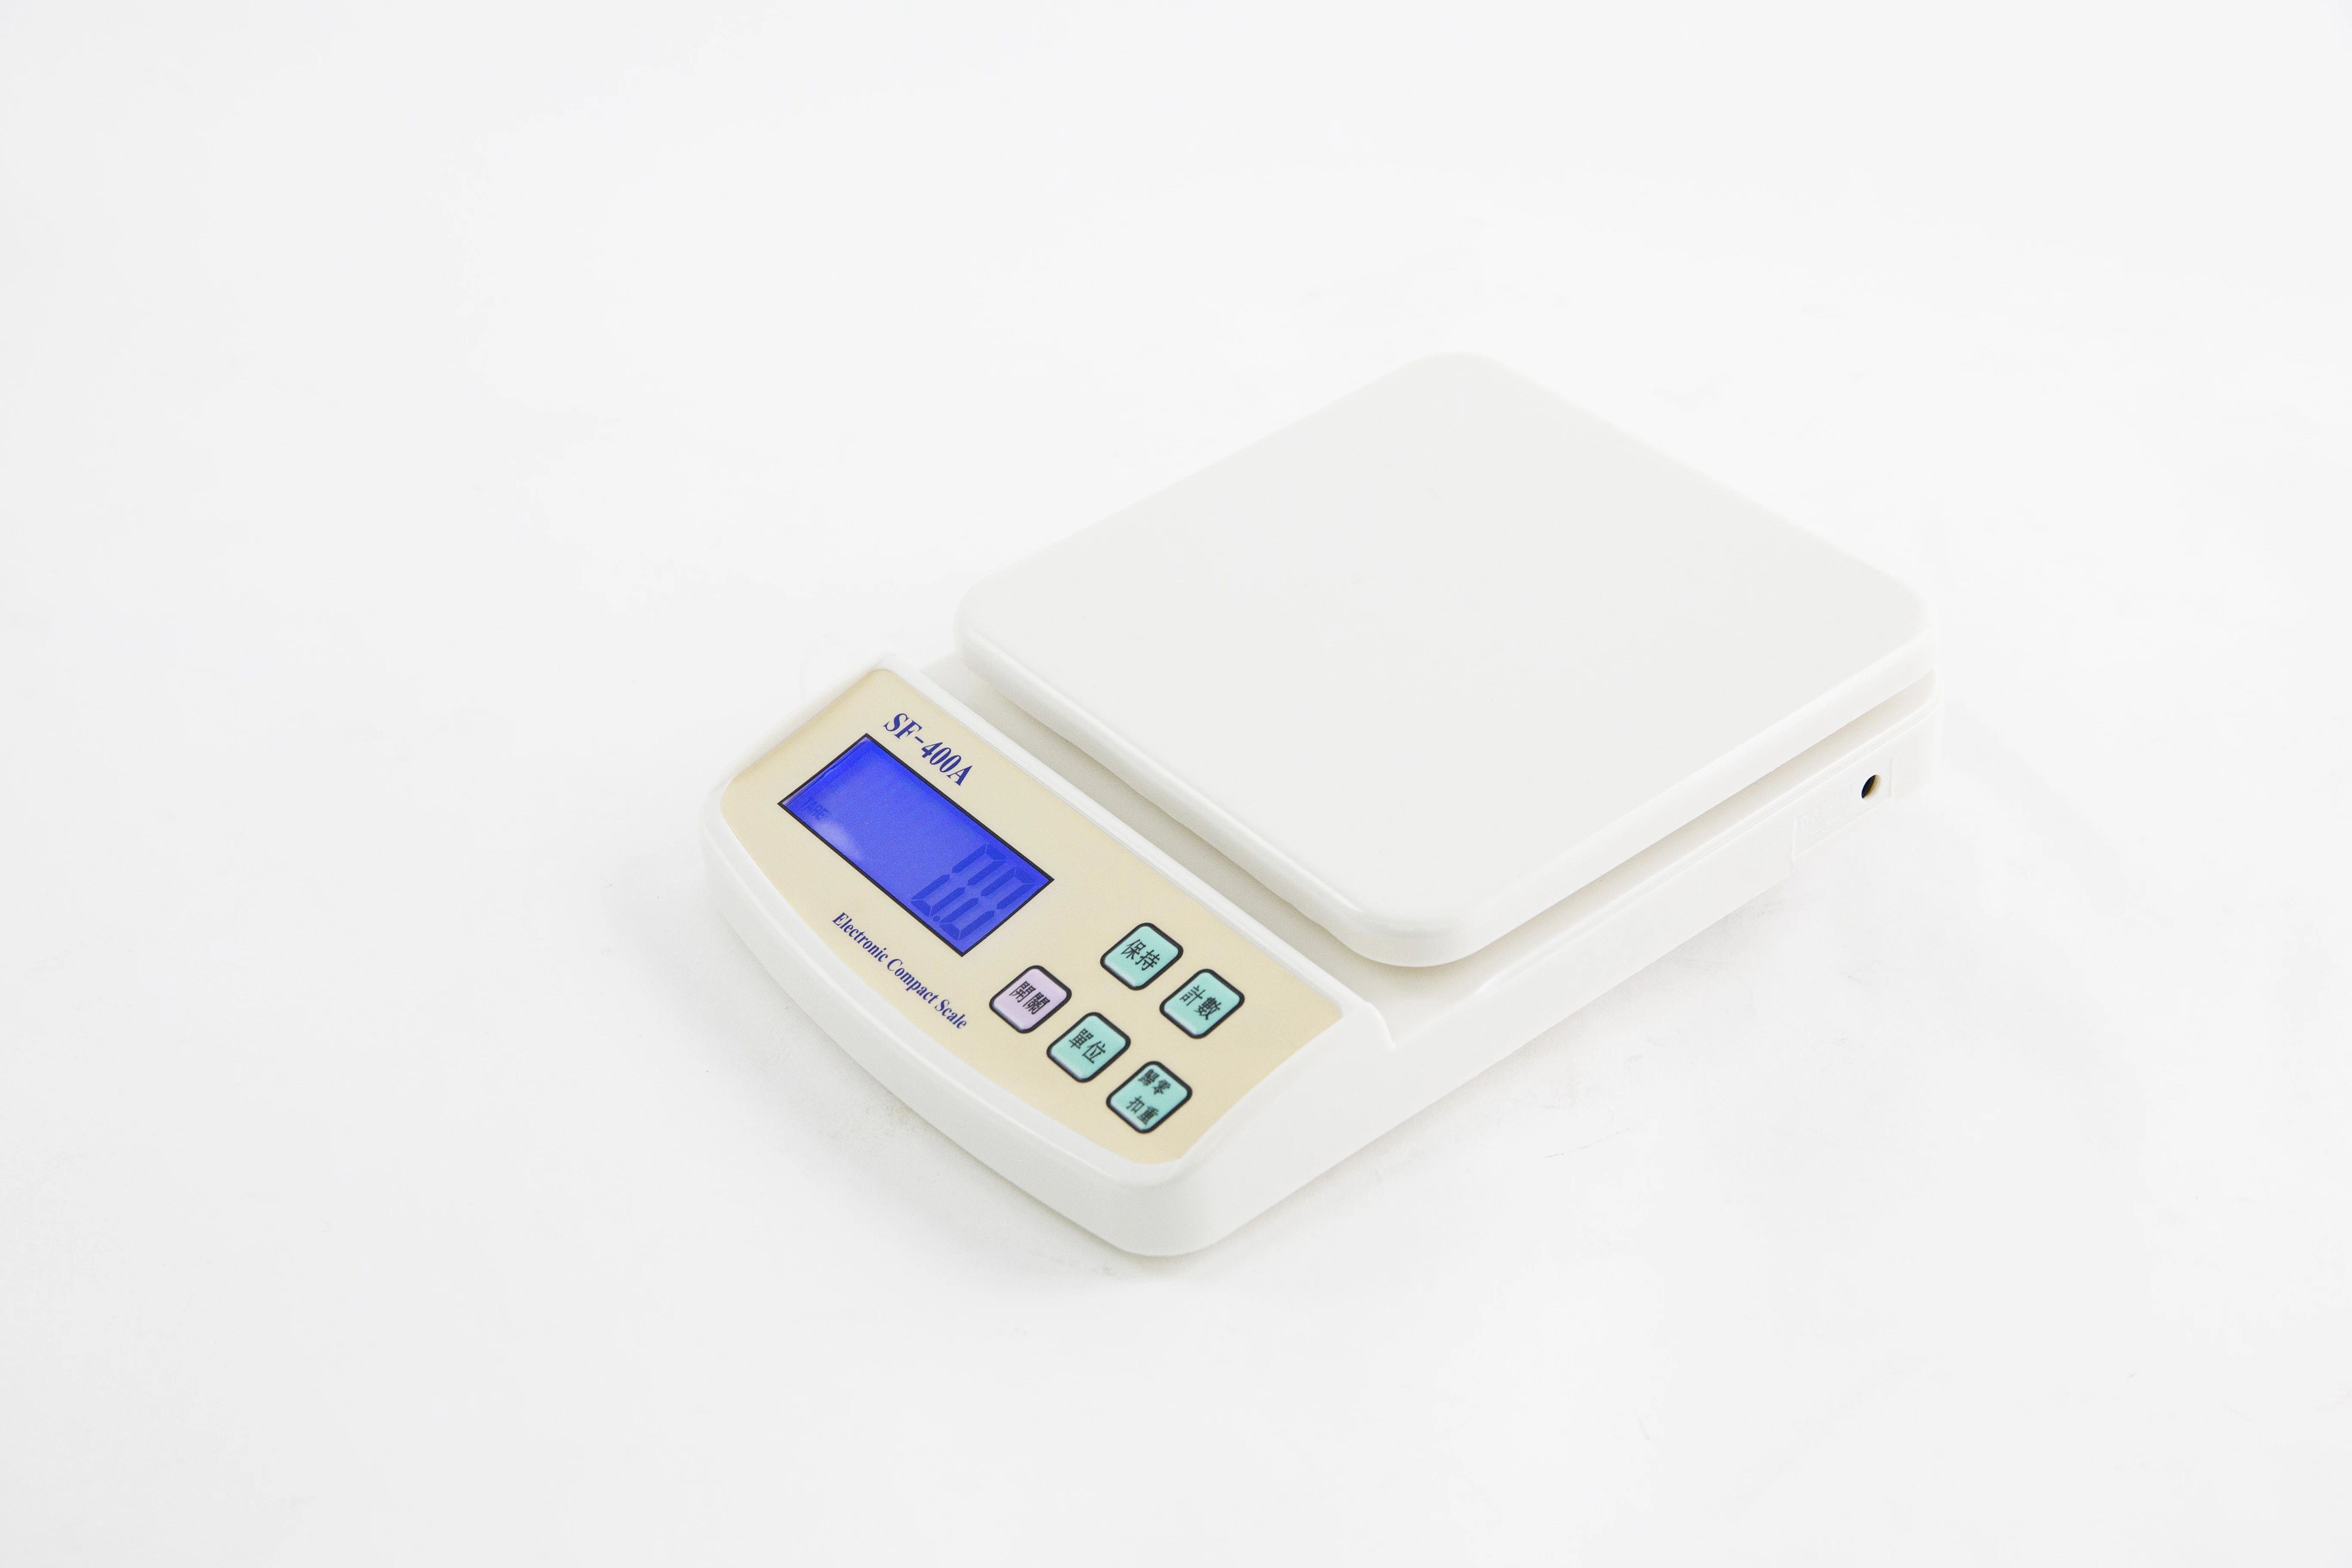 Digital Kitchen Food Diet Scale, Multifunction Weight Balance  22lbs/1g(0.04Oz)